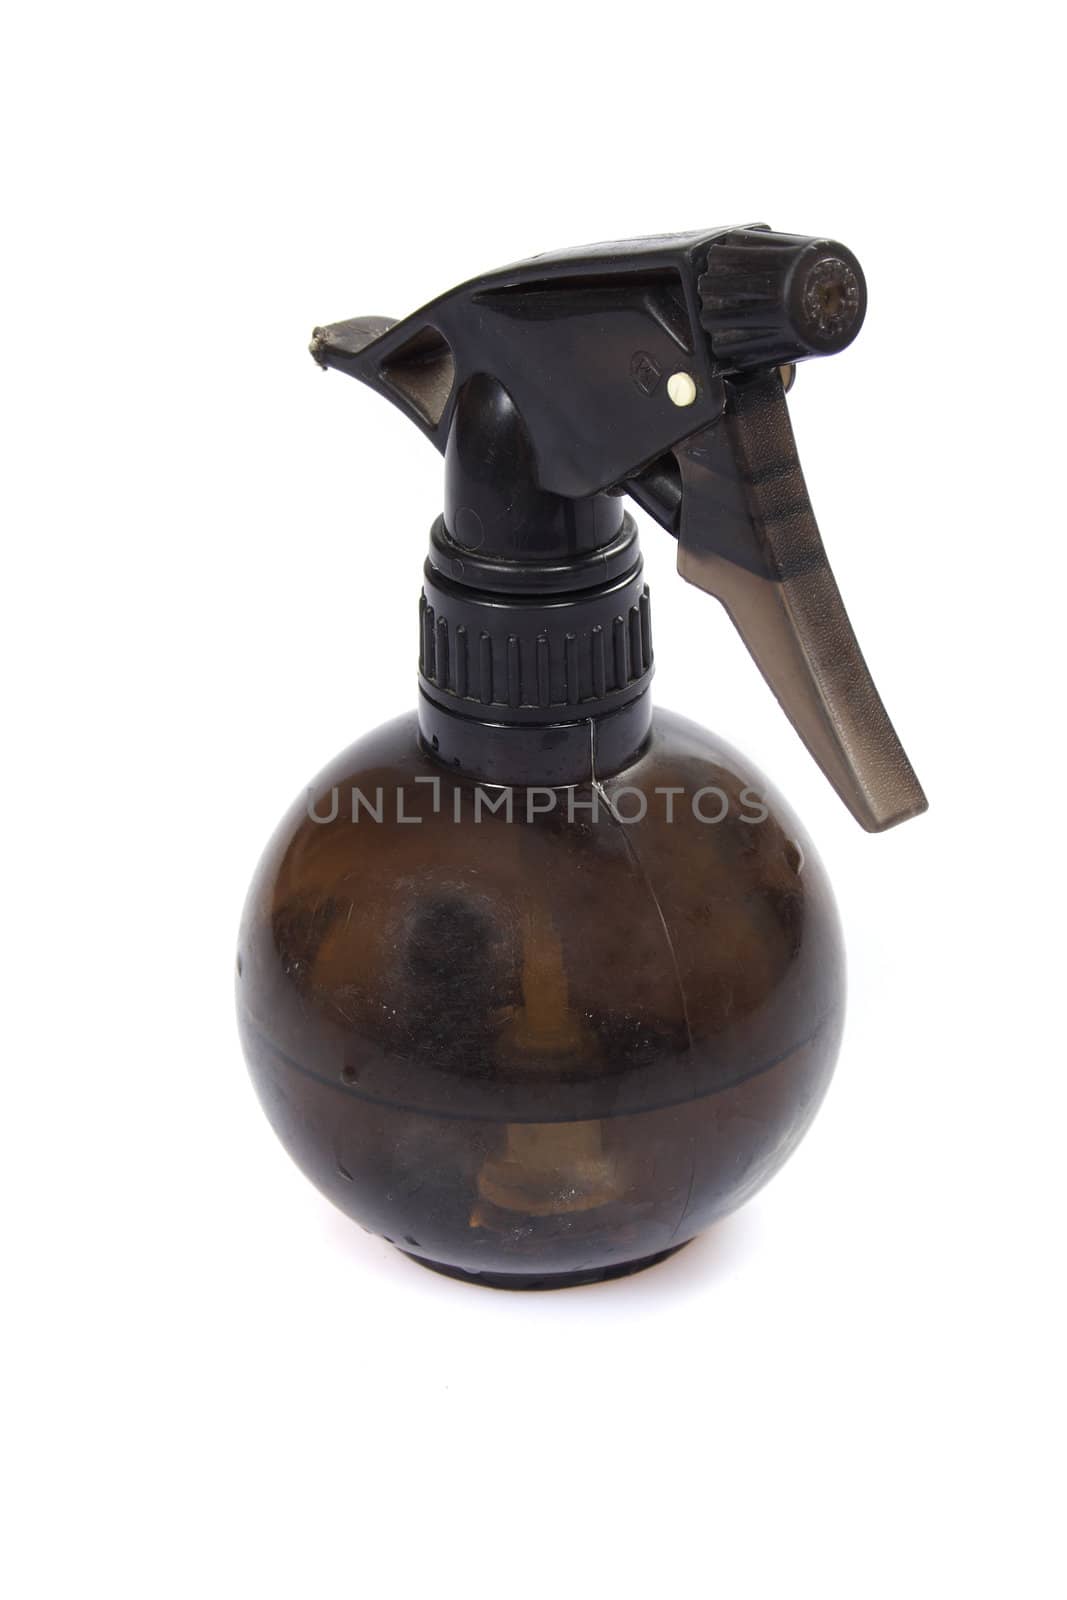 Black spray bottle photo on the white background